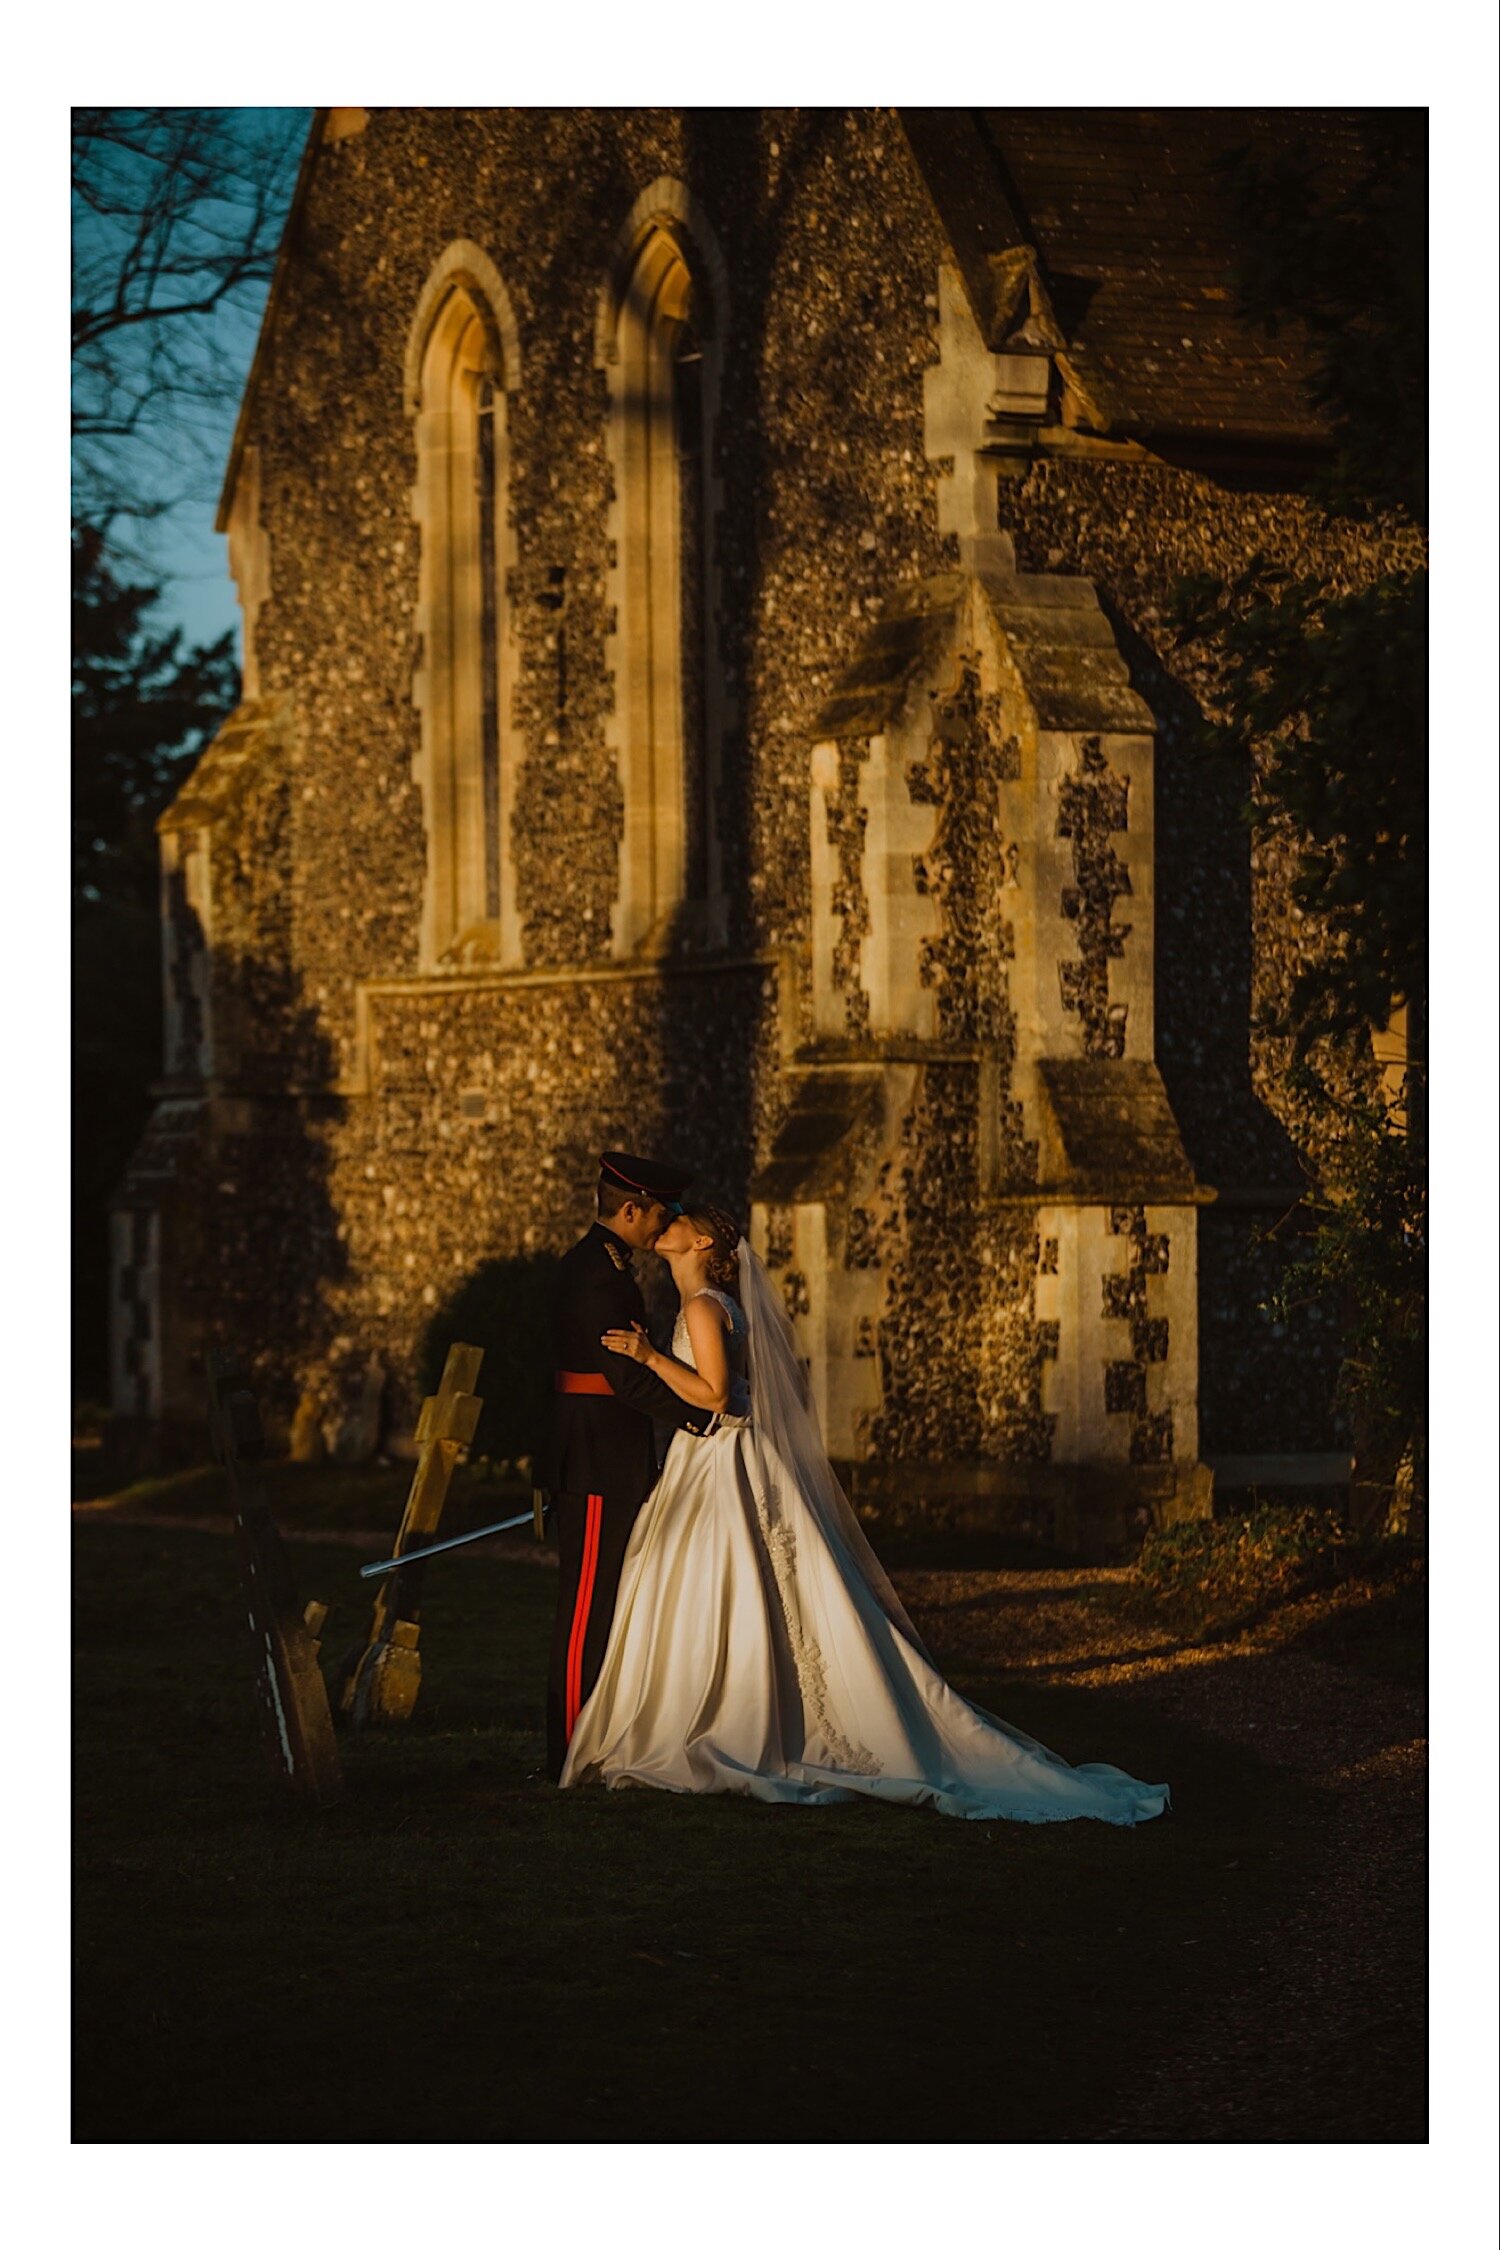 070_TWS-739_bride_church_hour_couple_photography_henley_oxfordshire_millitary_ceremony_sunset_golden_crooked_wedding_portraits_groom_winter_billet.jpg